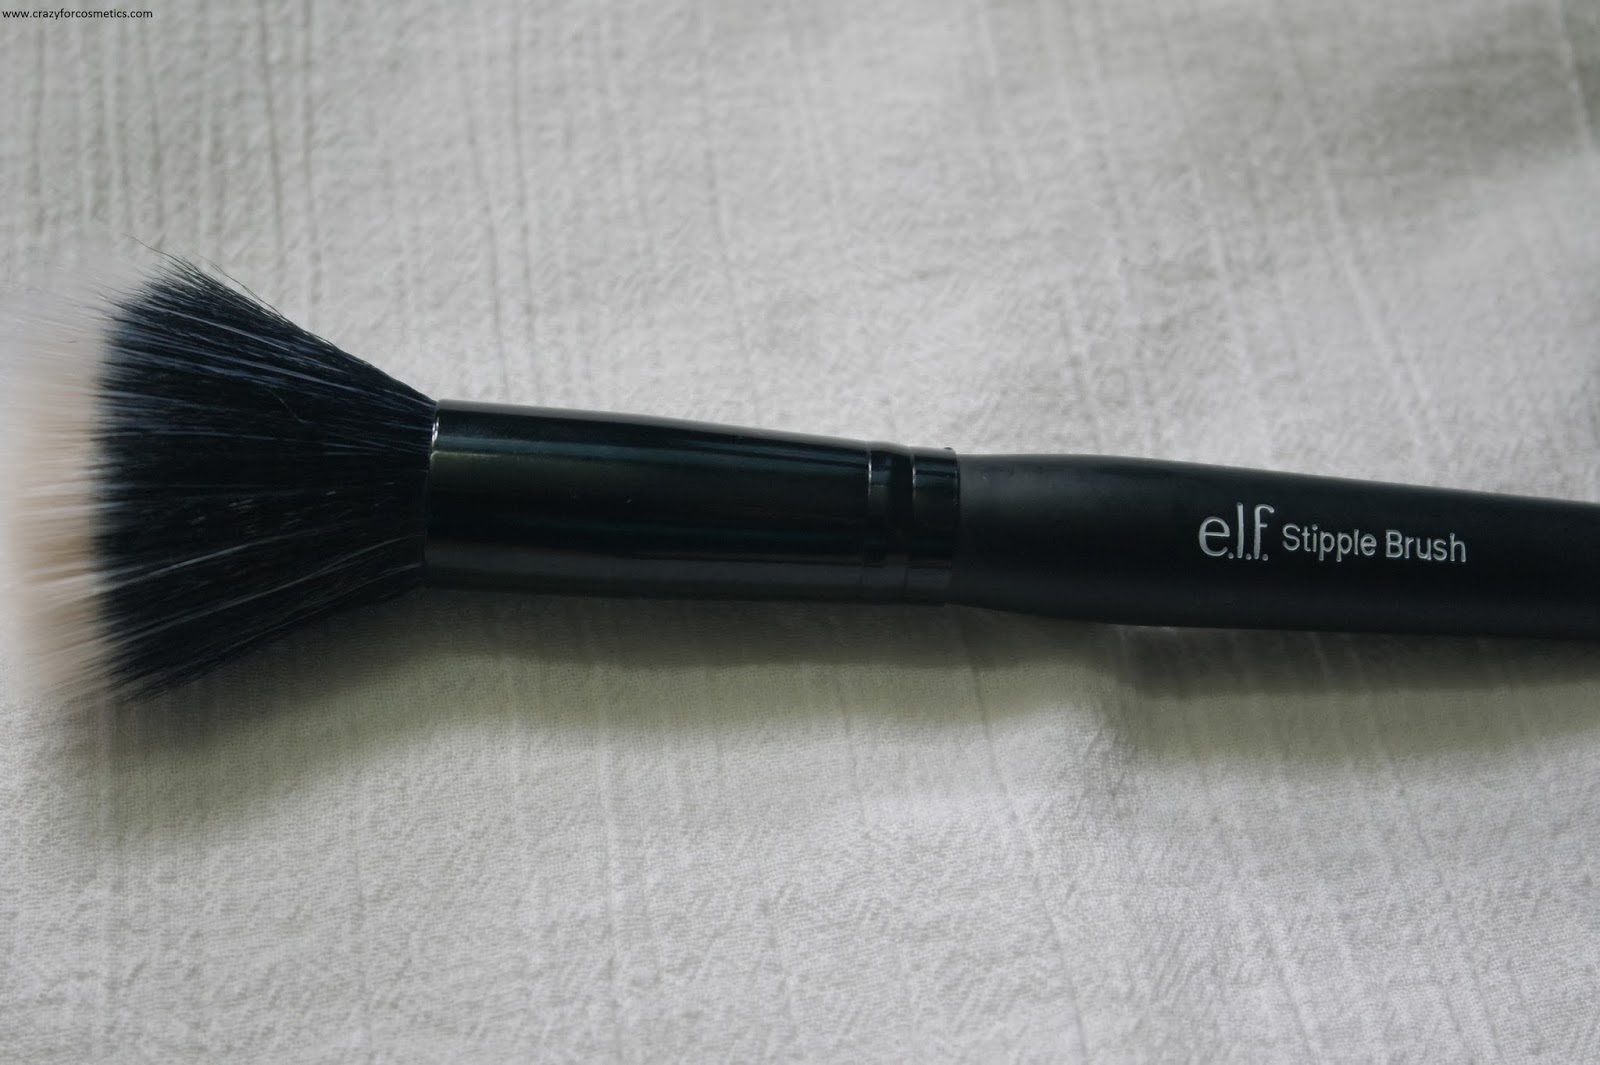 ELF Stipple Brush review- ELF Duo Fiber Brush review-Duo Fiber Brush review